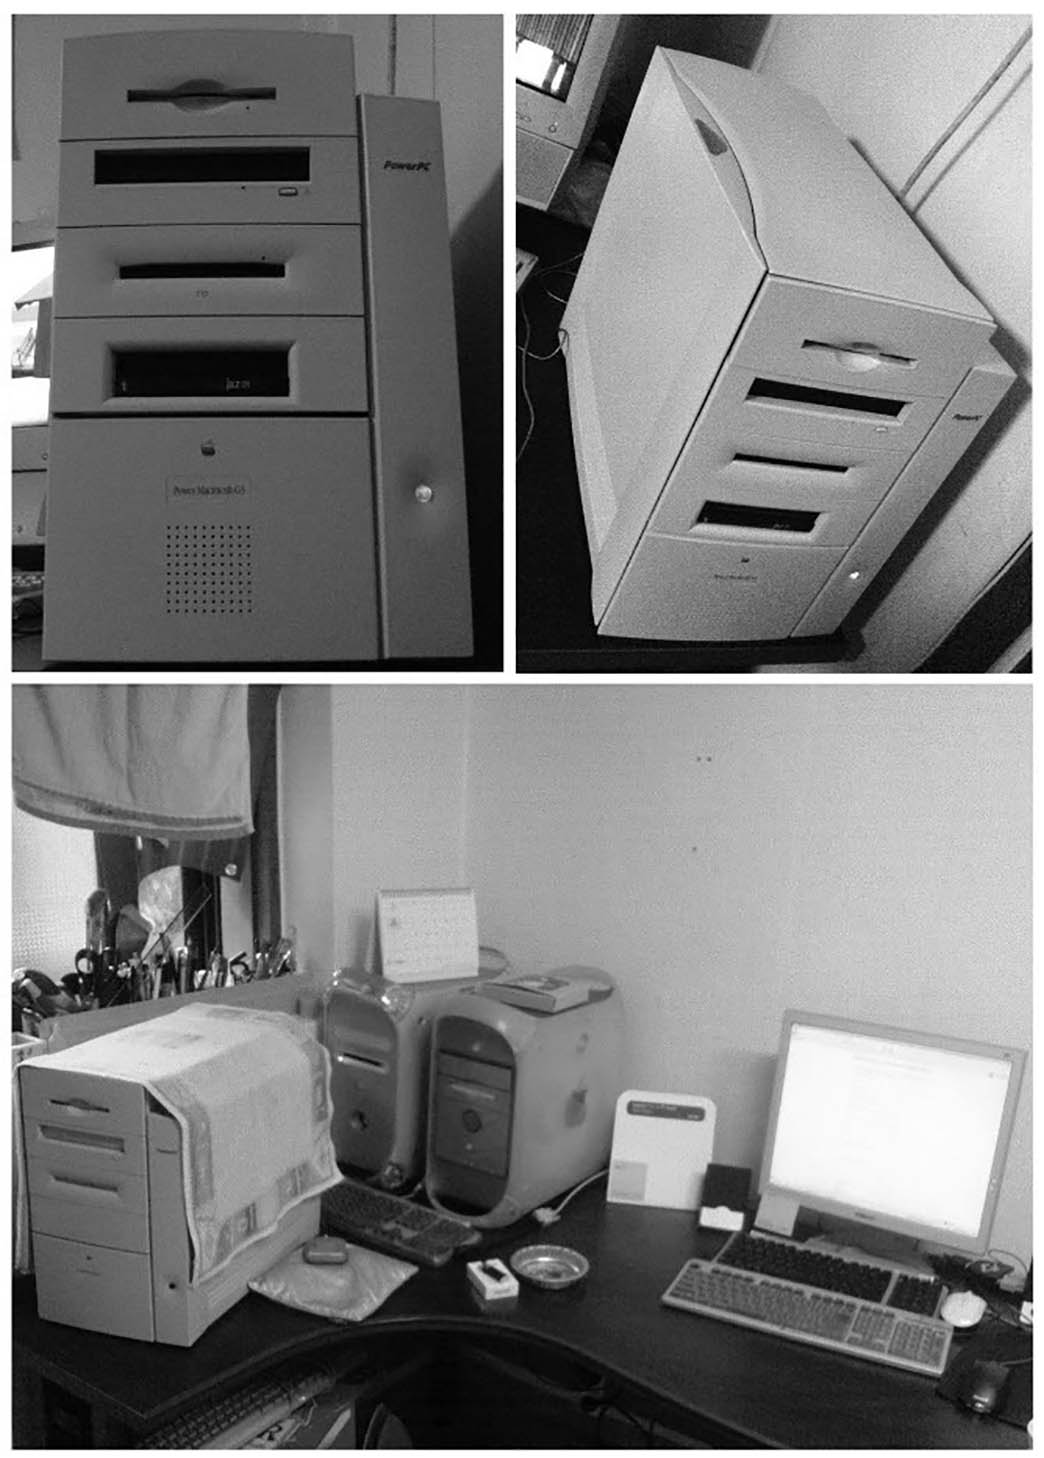 Power Macintosh G3 / 333 Mini tower 4